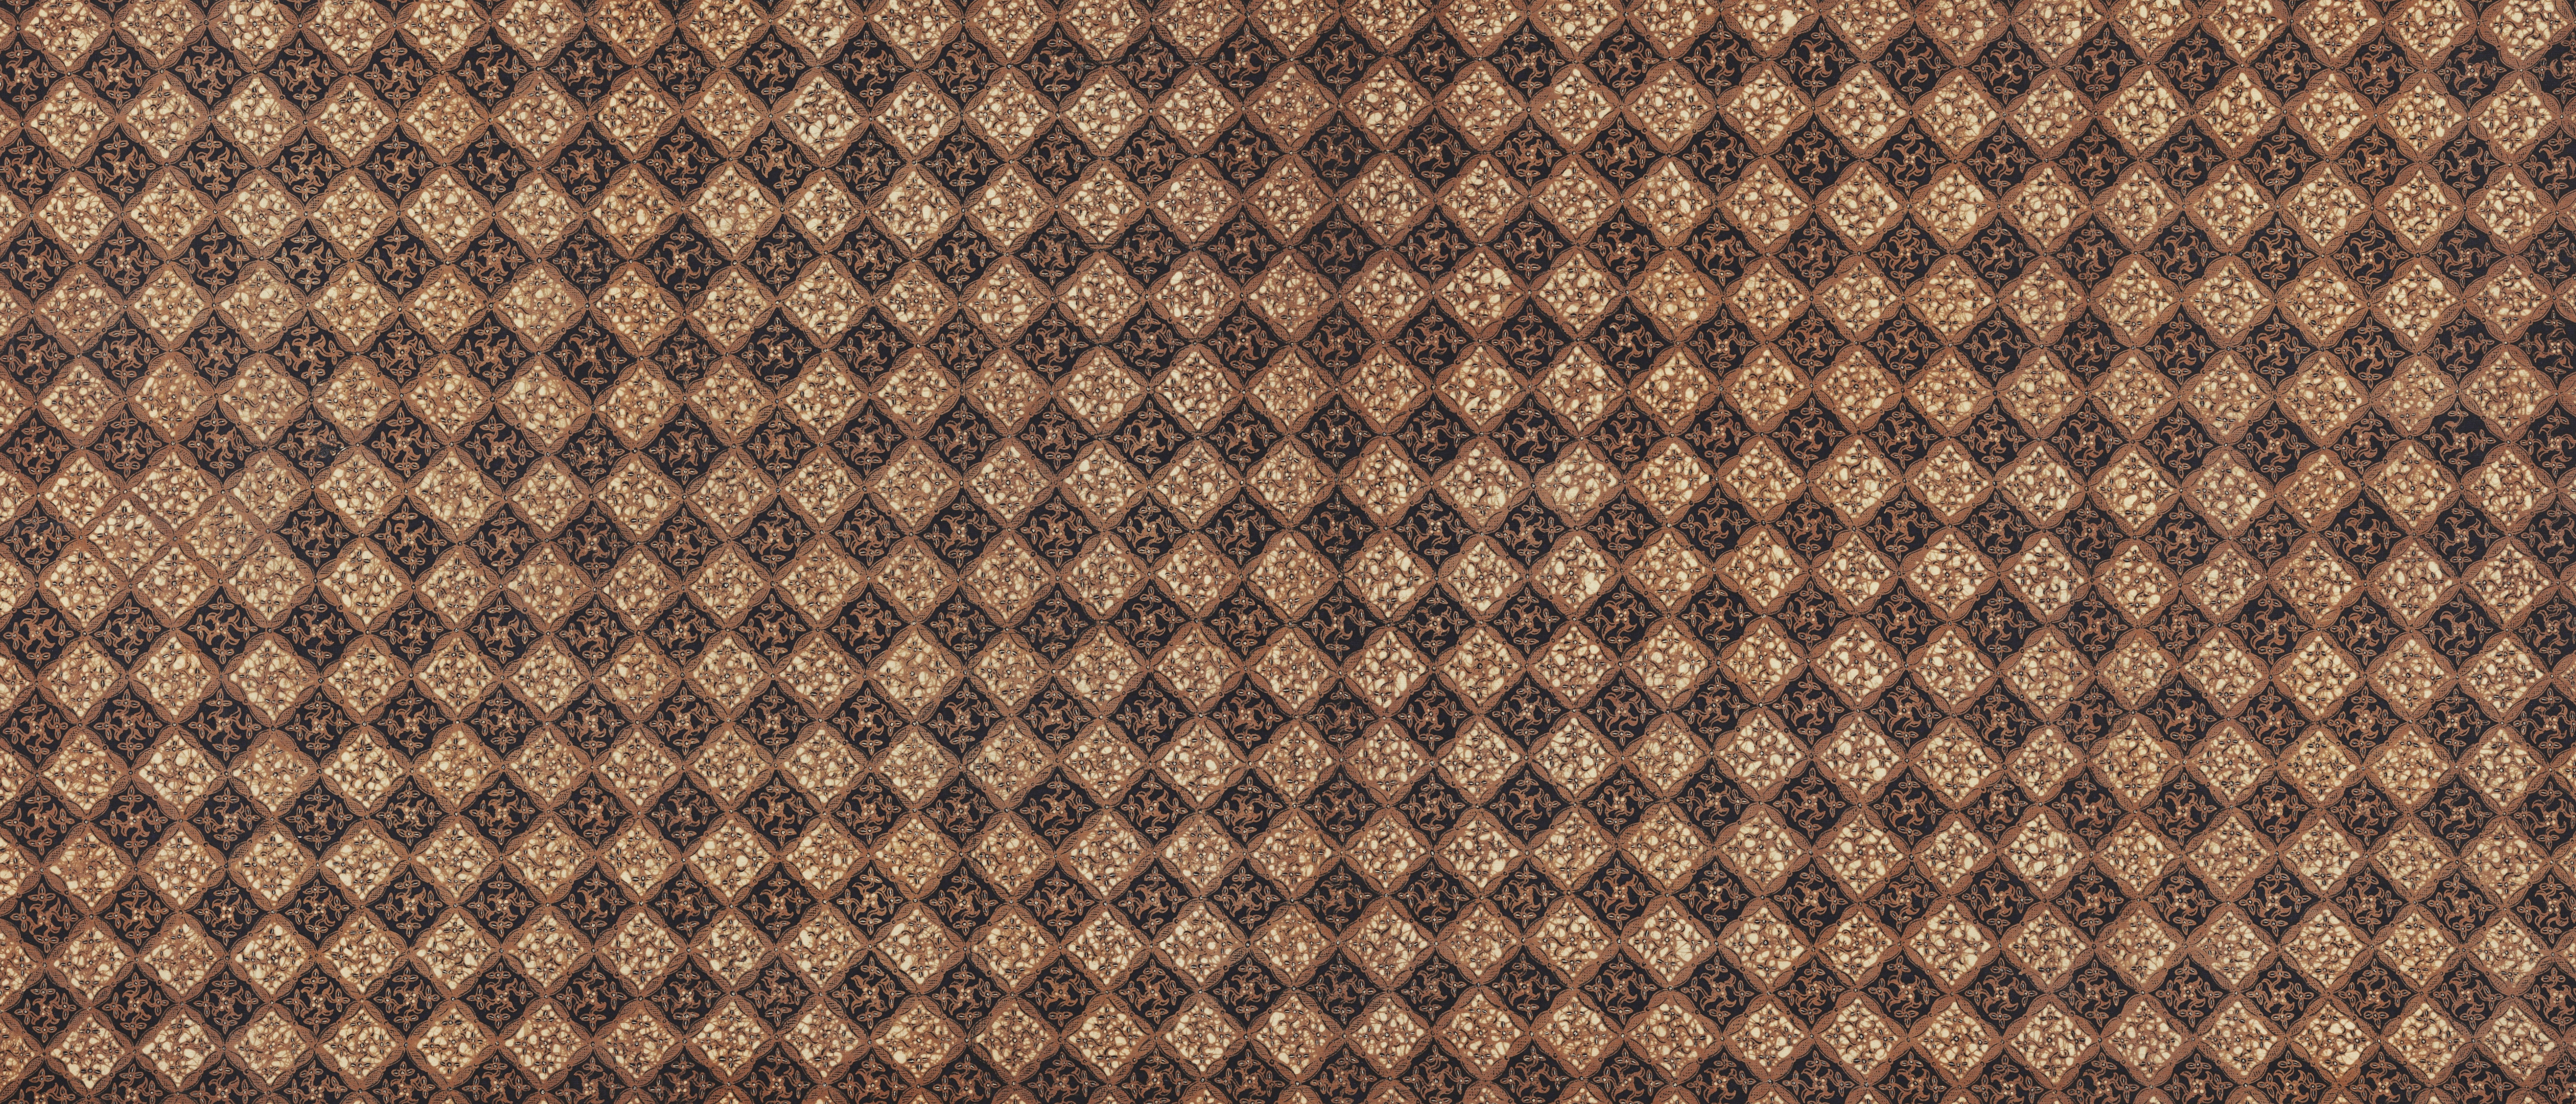 Texture Fabric Geometric Figures Ultrawide 5941x2546